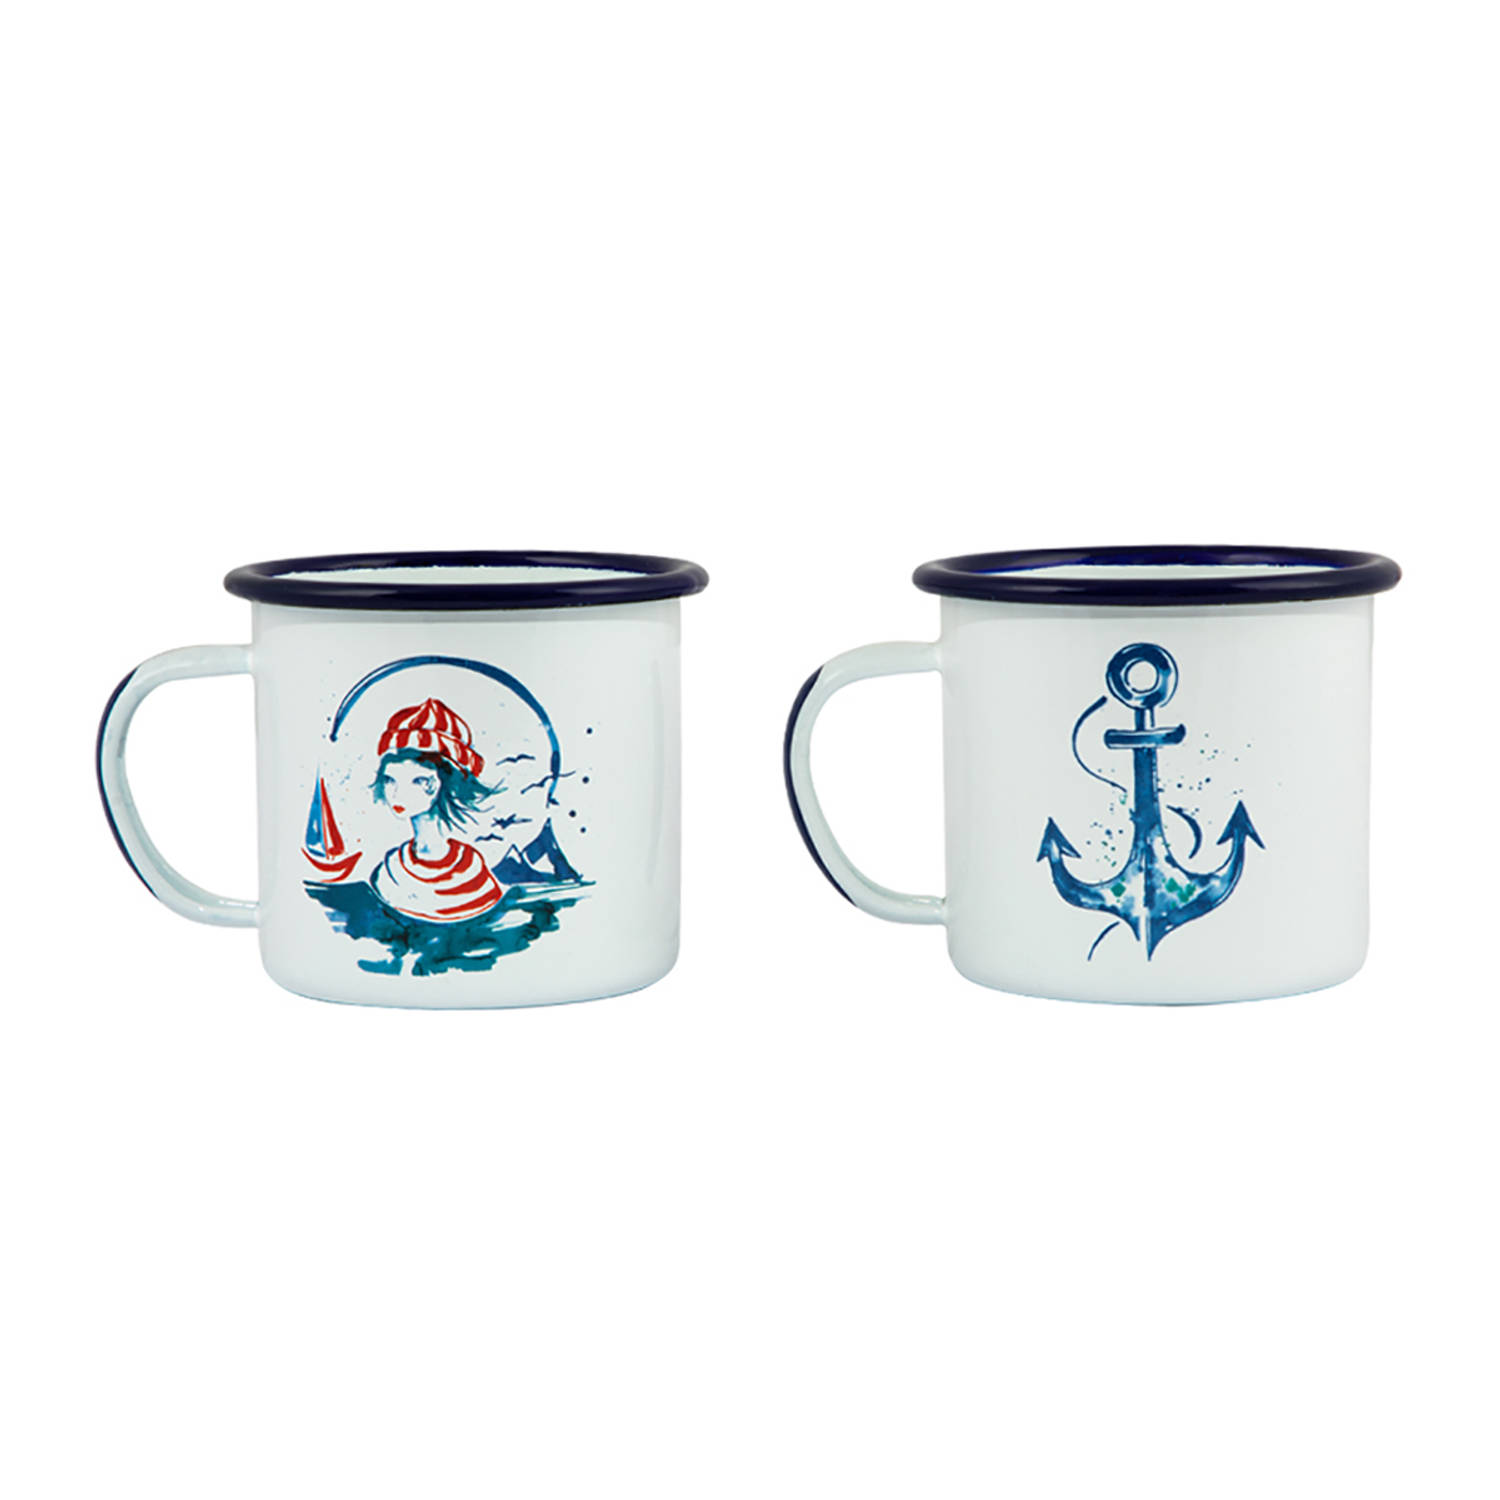 Anemoss Sailor Girl and Anchor Enamel Mugs Set Pack of 2